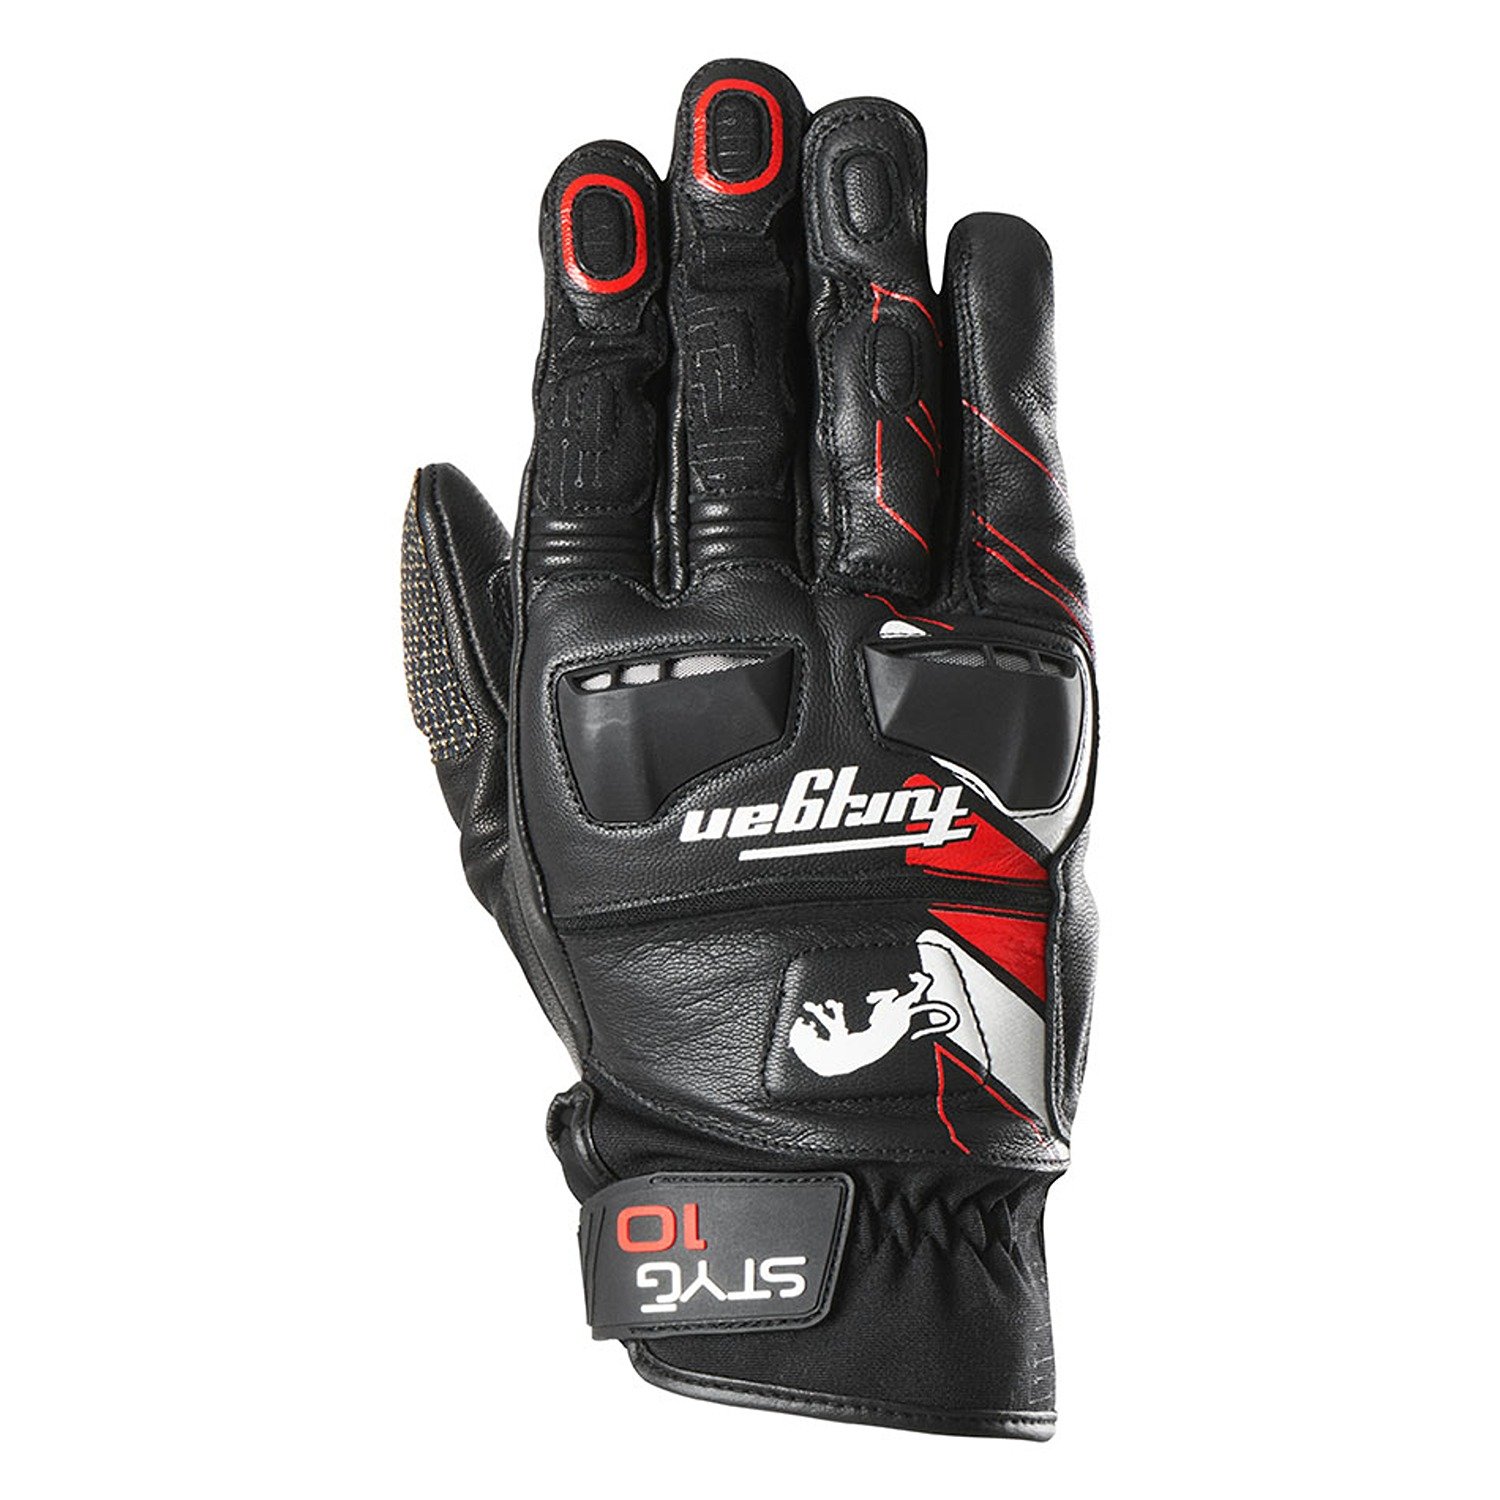 Image of Furygan Styg10 Gloves Black White Red Size XL EN